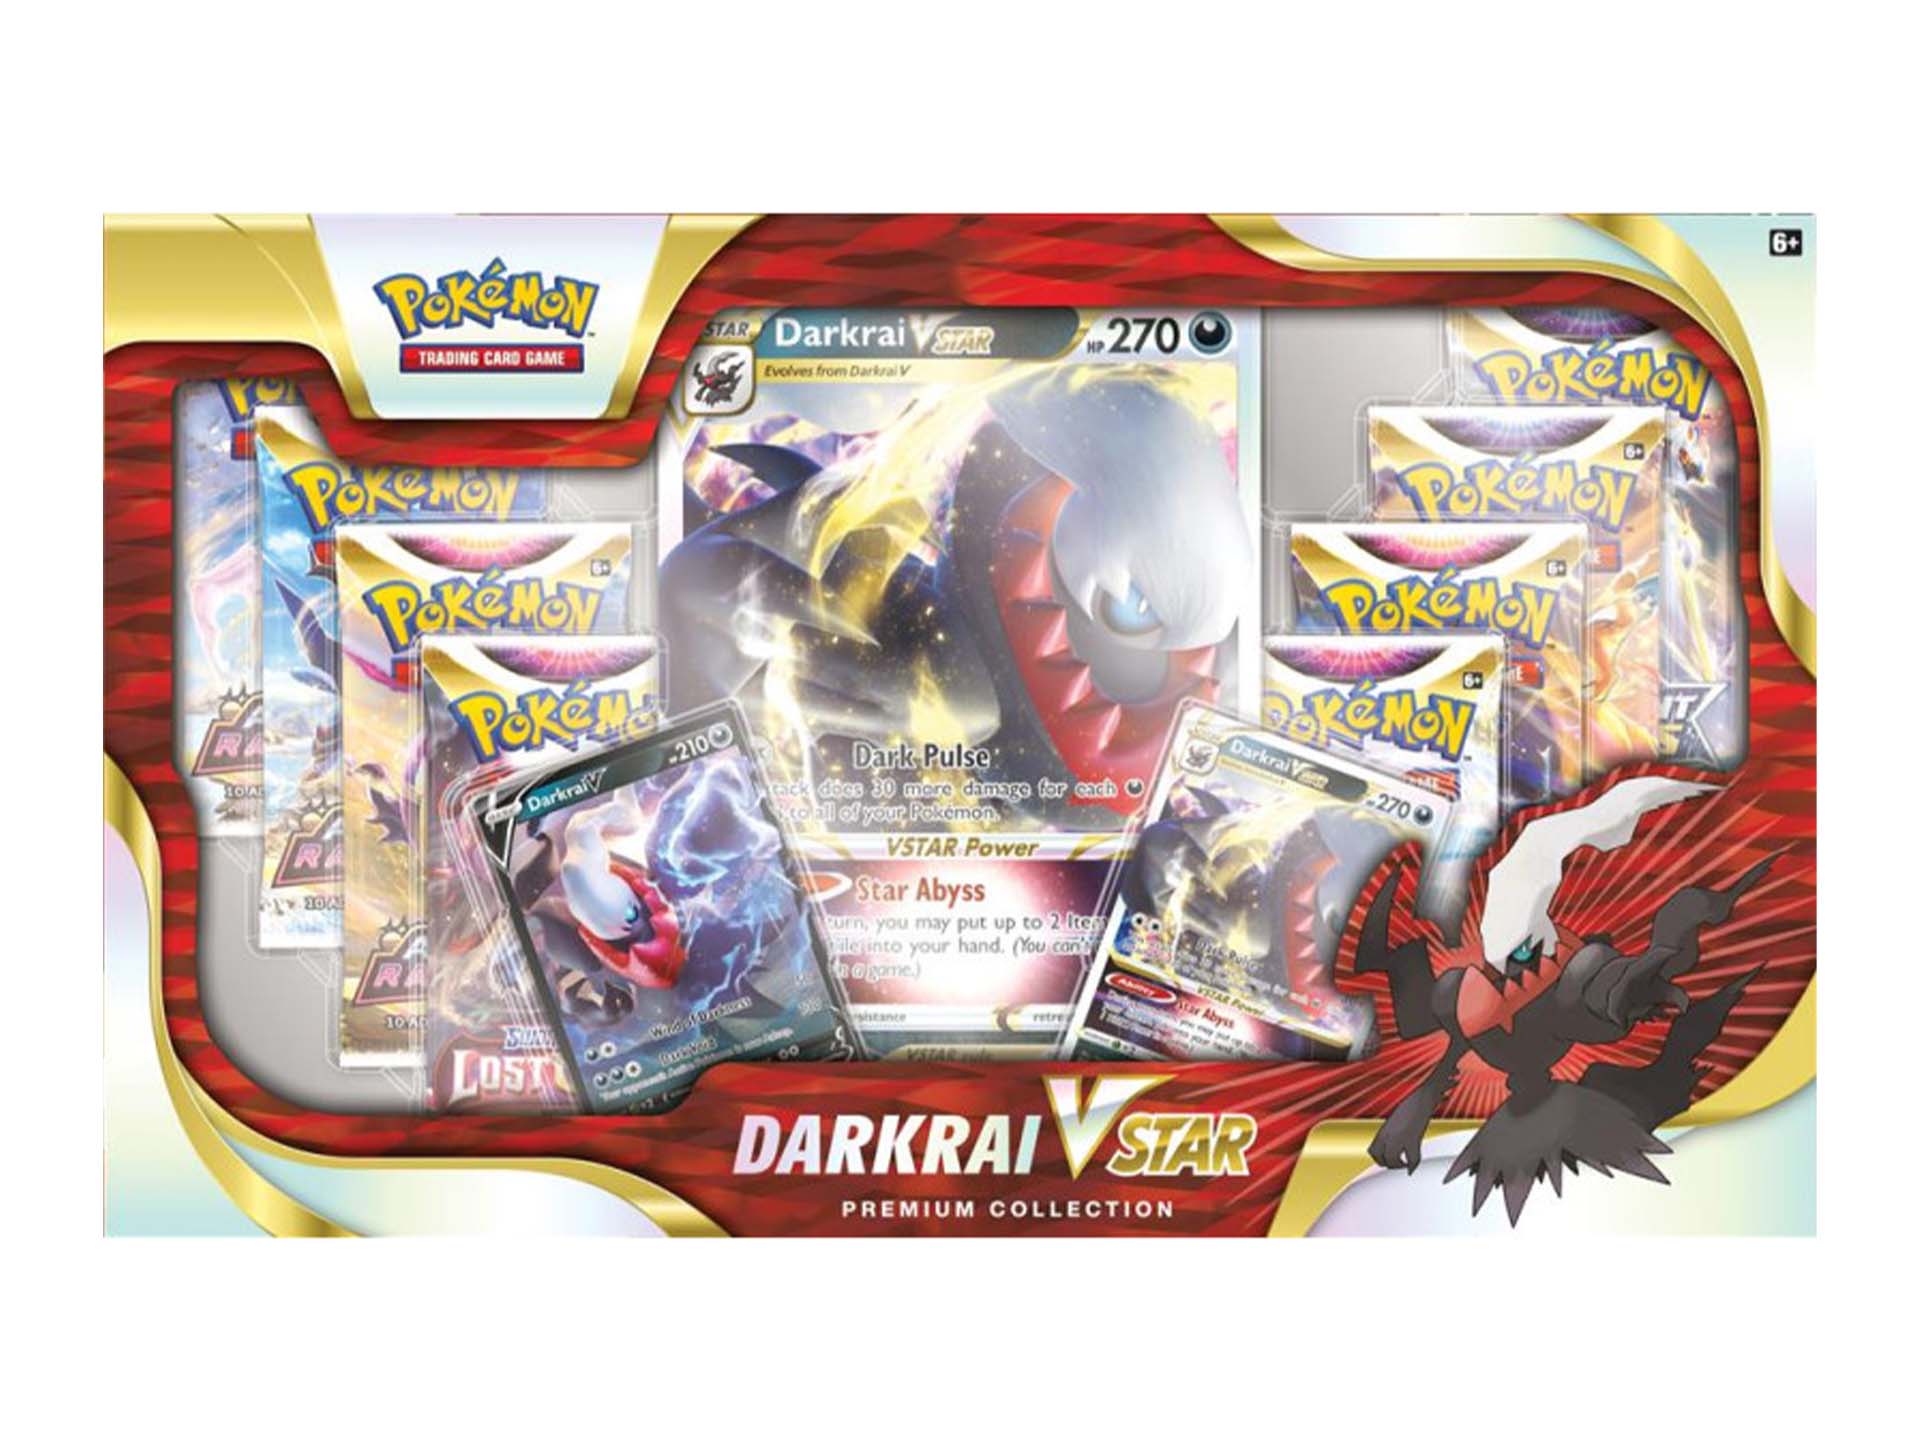 Pokémon Darkrai VSTAR box